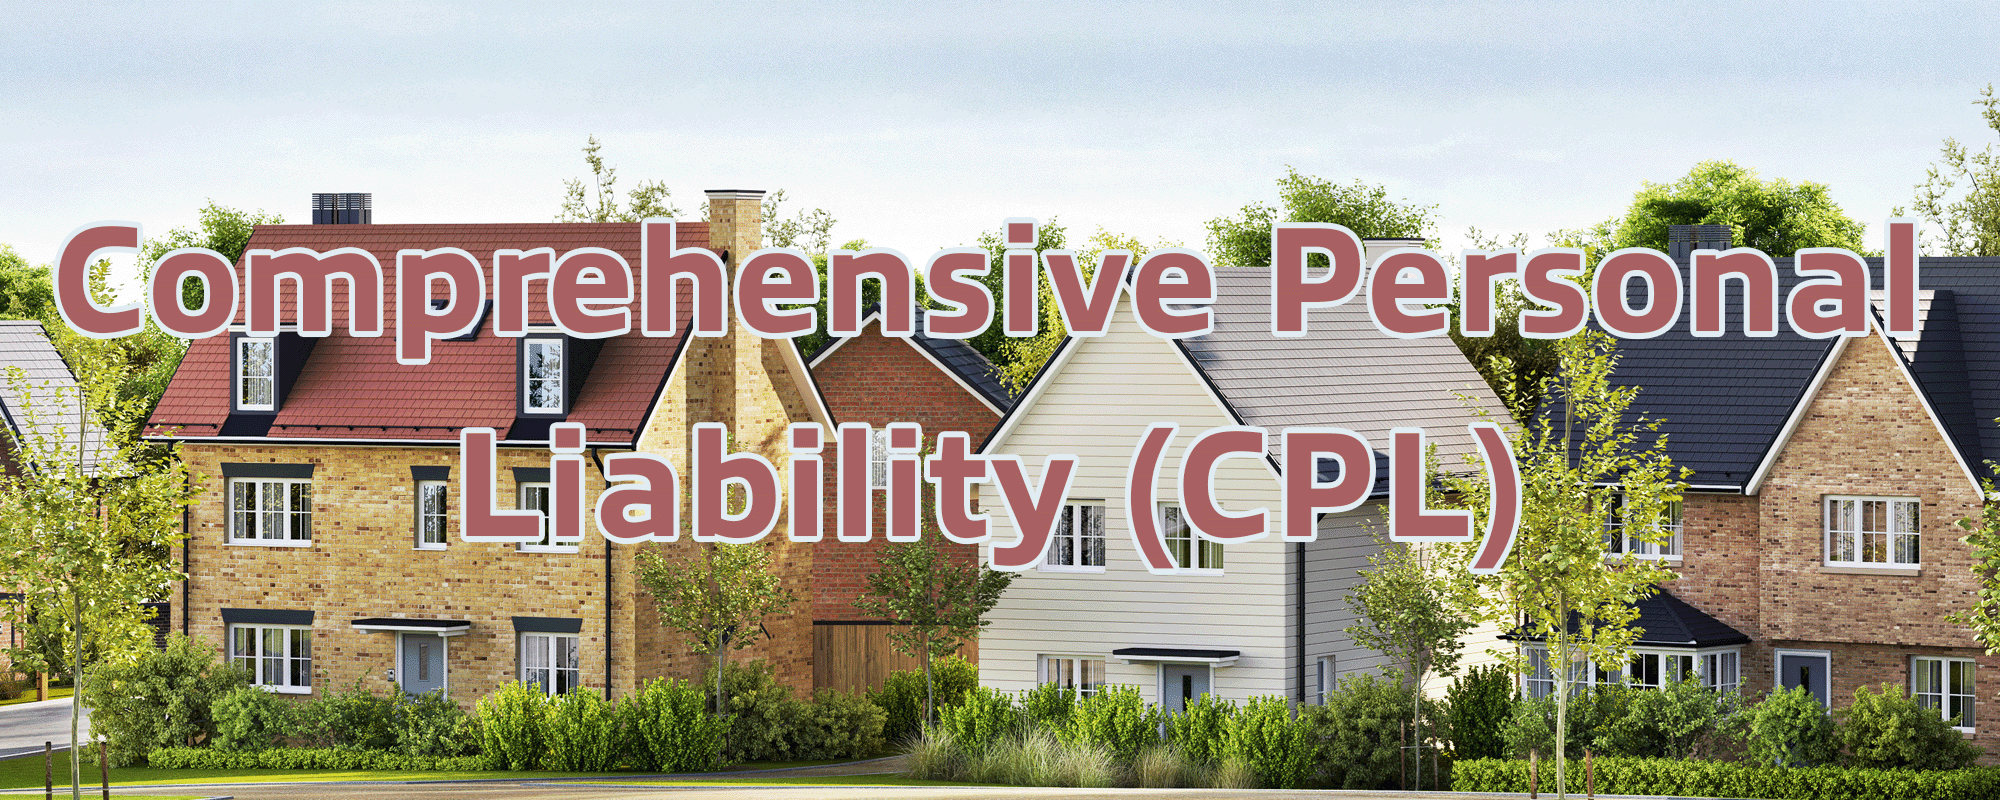 Comprehensive Personal Liability CPL